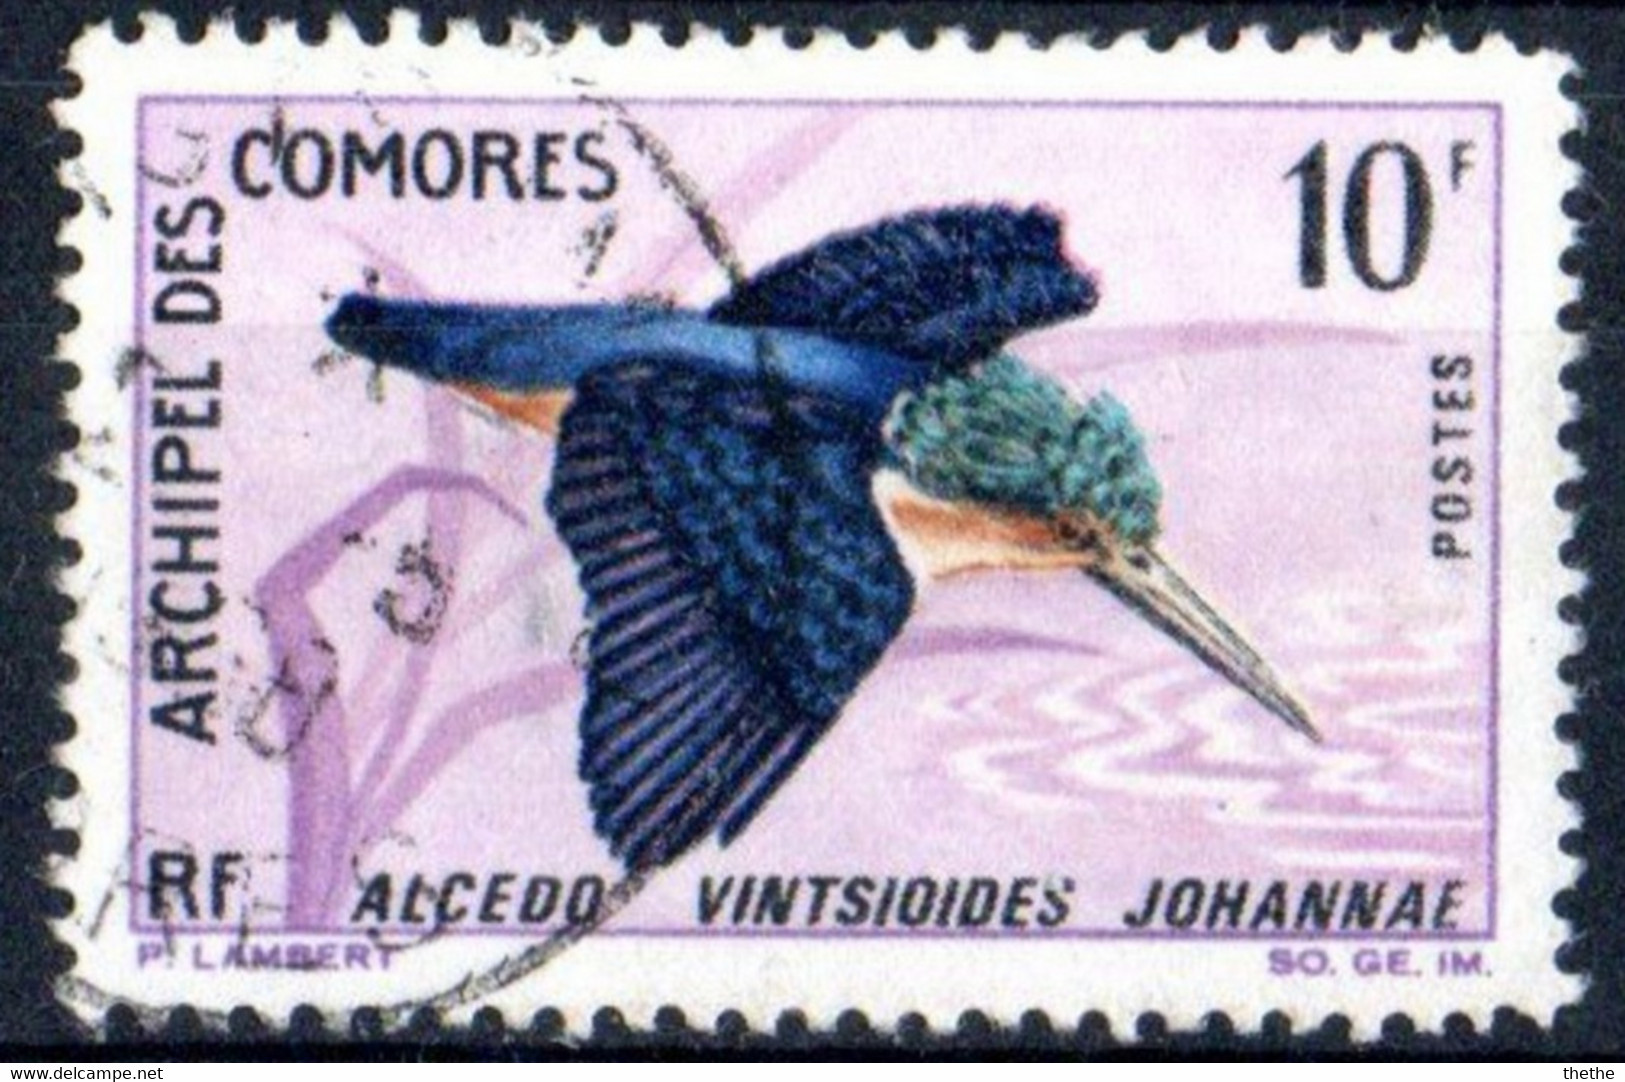 COMORES - Martin-pêcheur Malgache (Alcedo Vintsioides Johannae) - Used Stamps